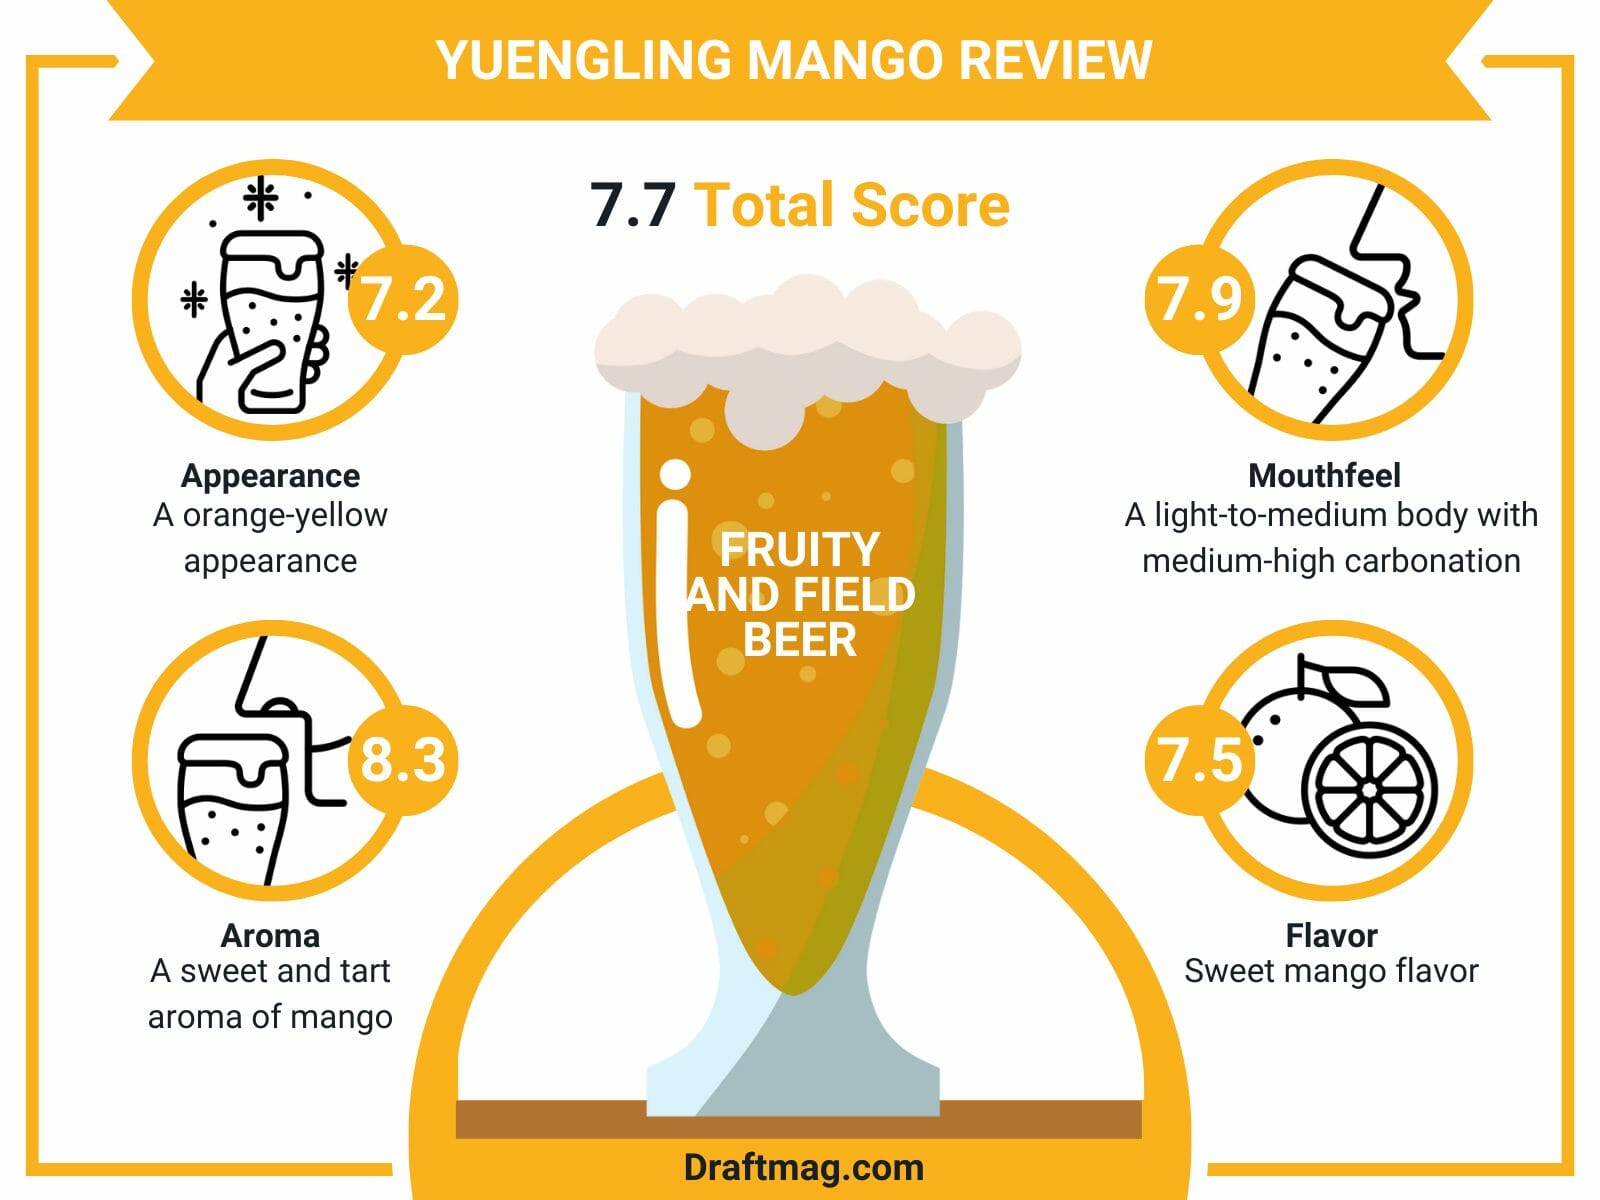 Yuengling mango review infographic